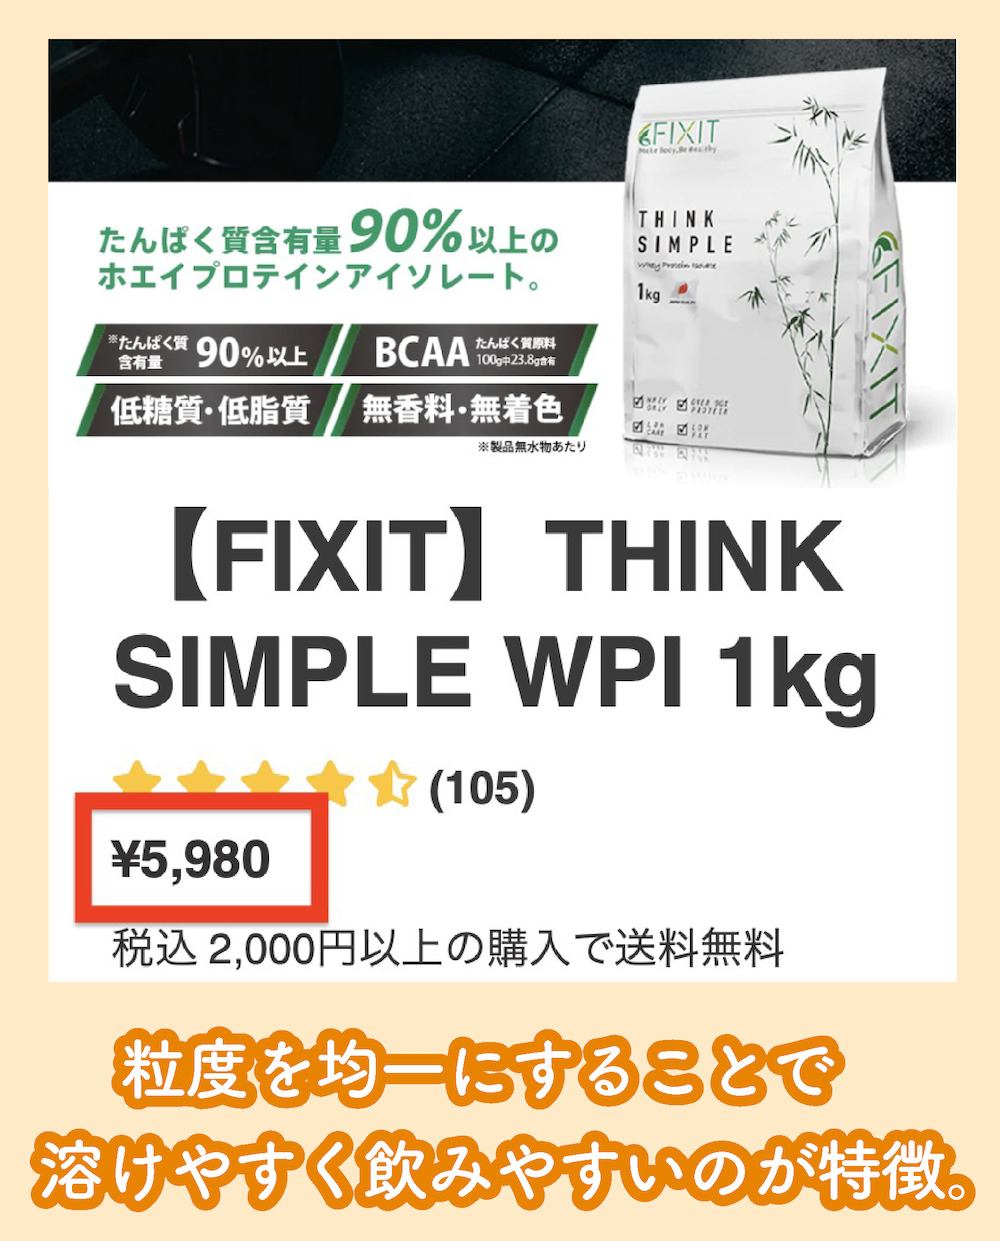 FIXIT THINK SIMPLE WPIの価格